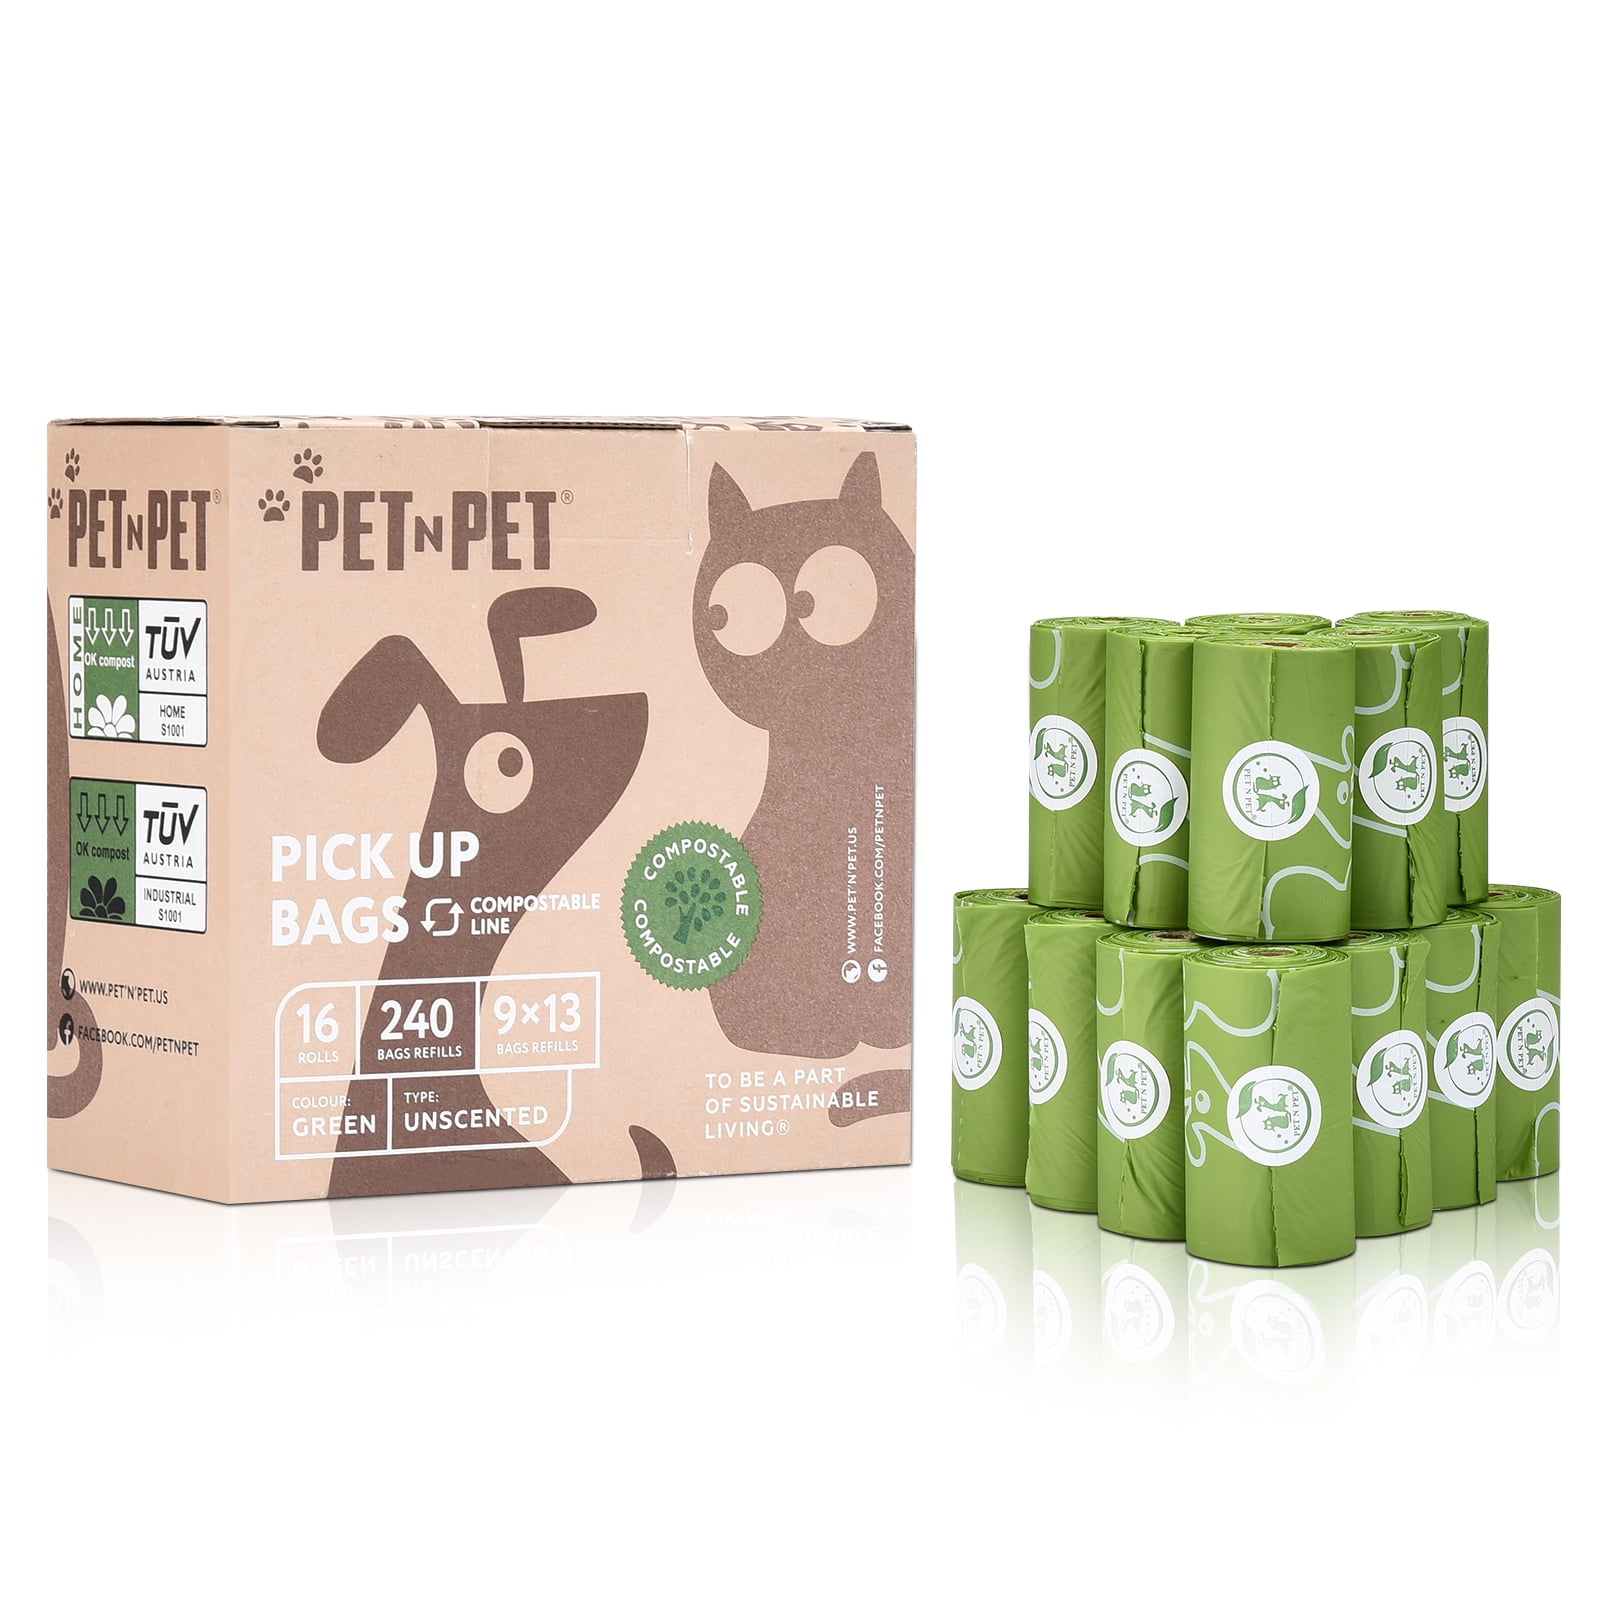 Biodegradable Dog Poop Bags  Pet Animal Waste Bags Manufacturer